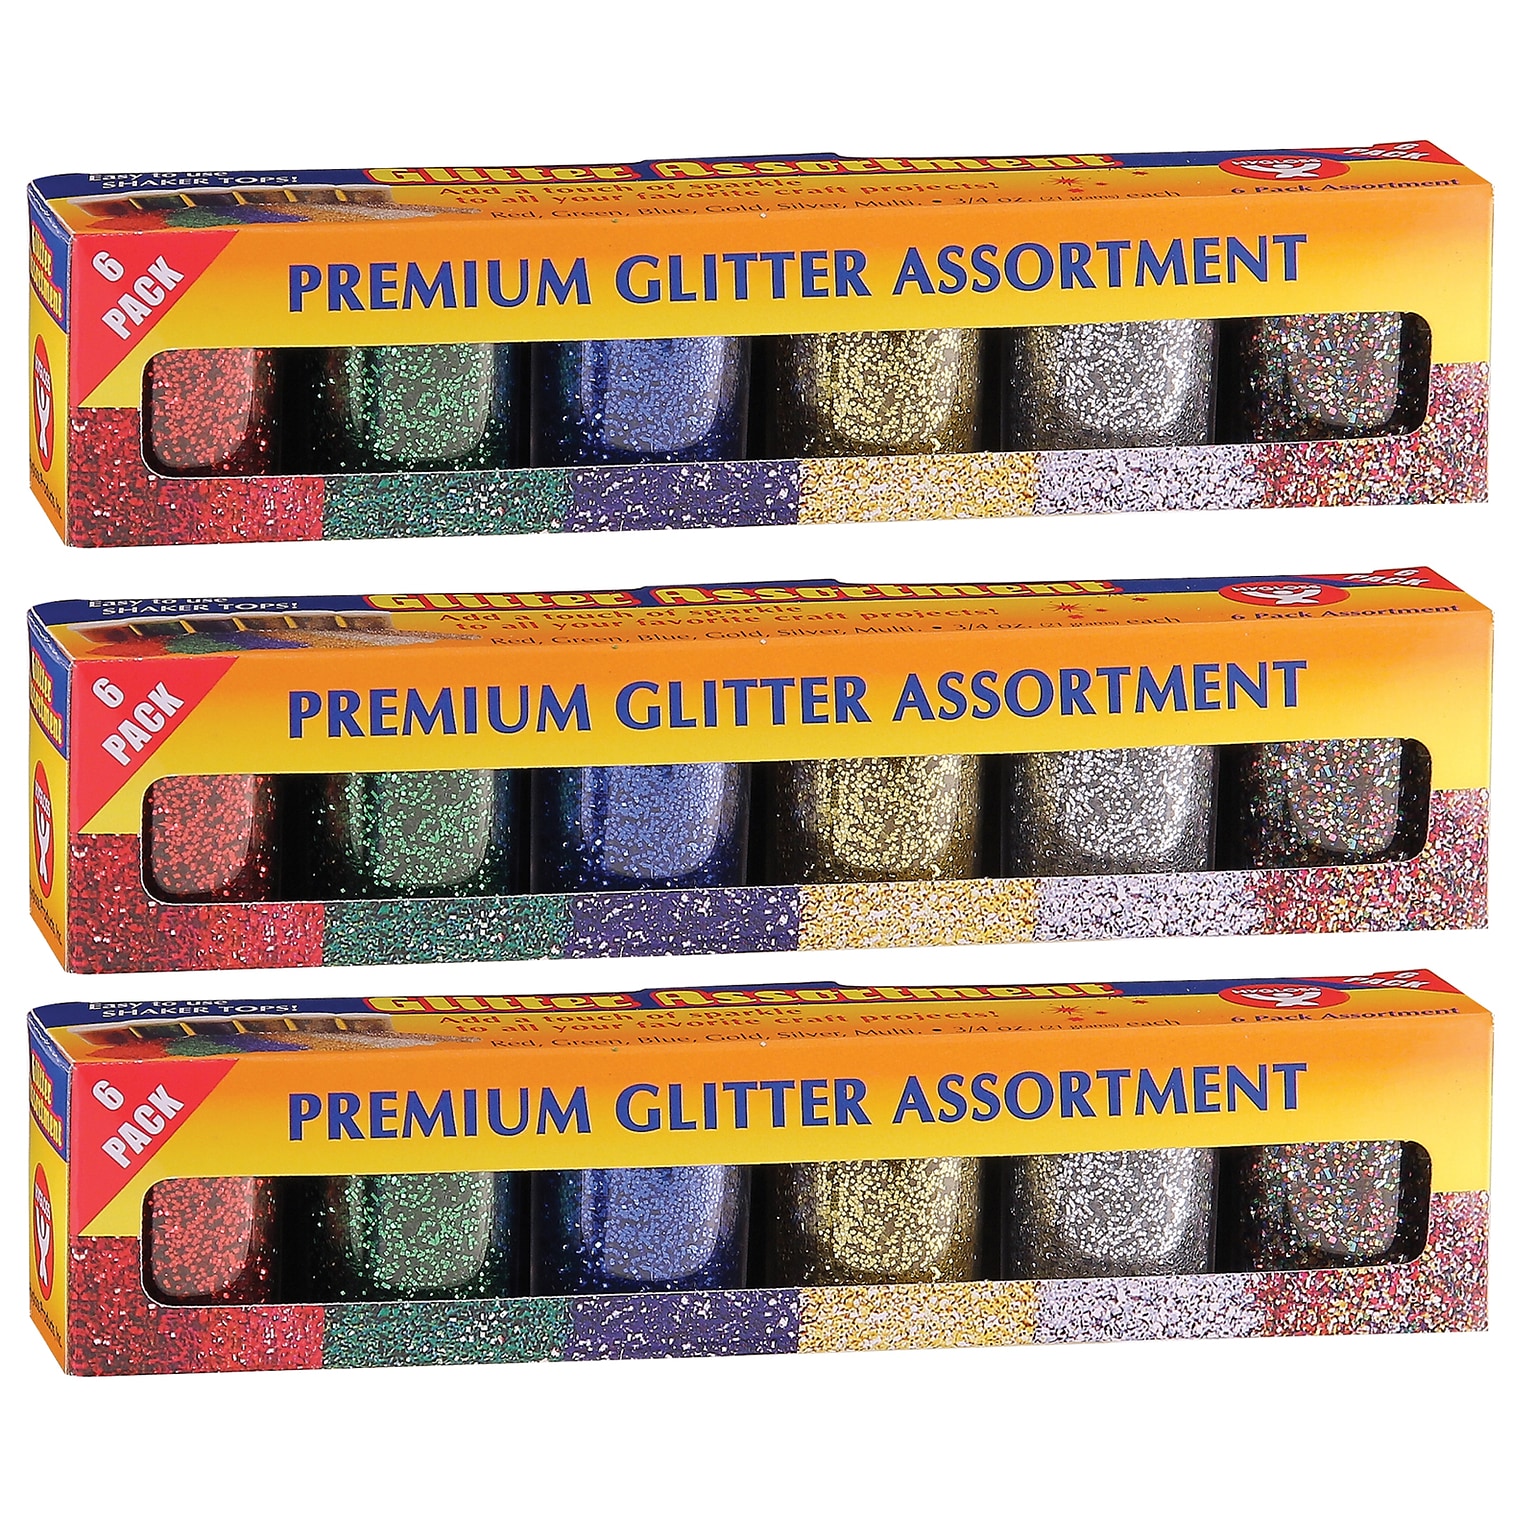 Hygloss Premium Glitter Assortment, 6 Colors/Pack, 3 Packs (HYG37506-3)